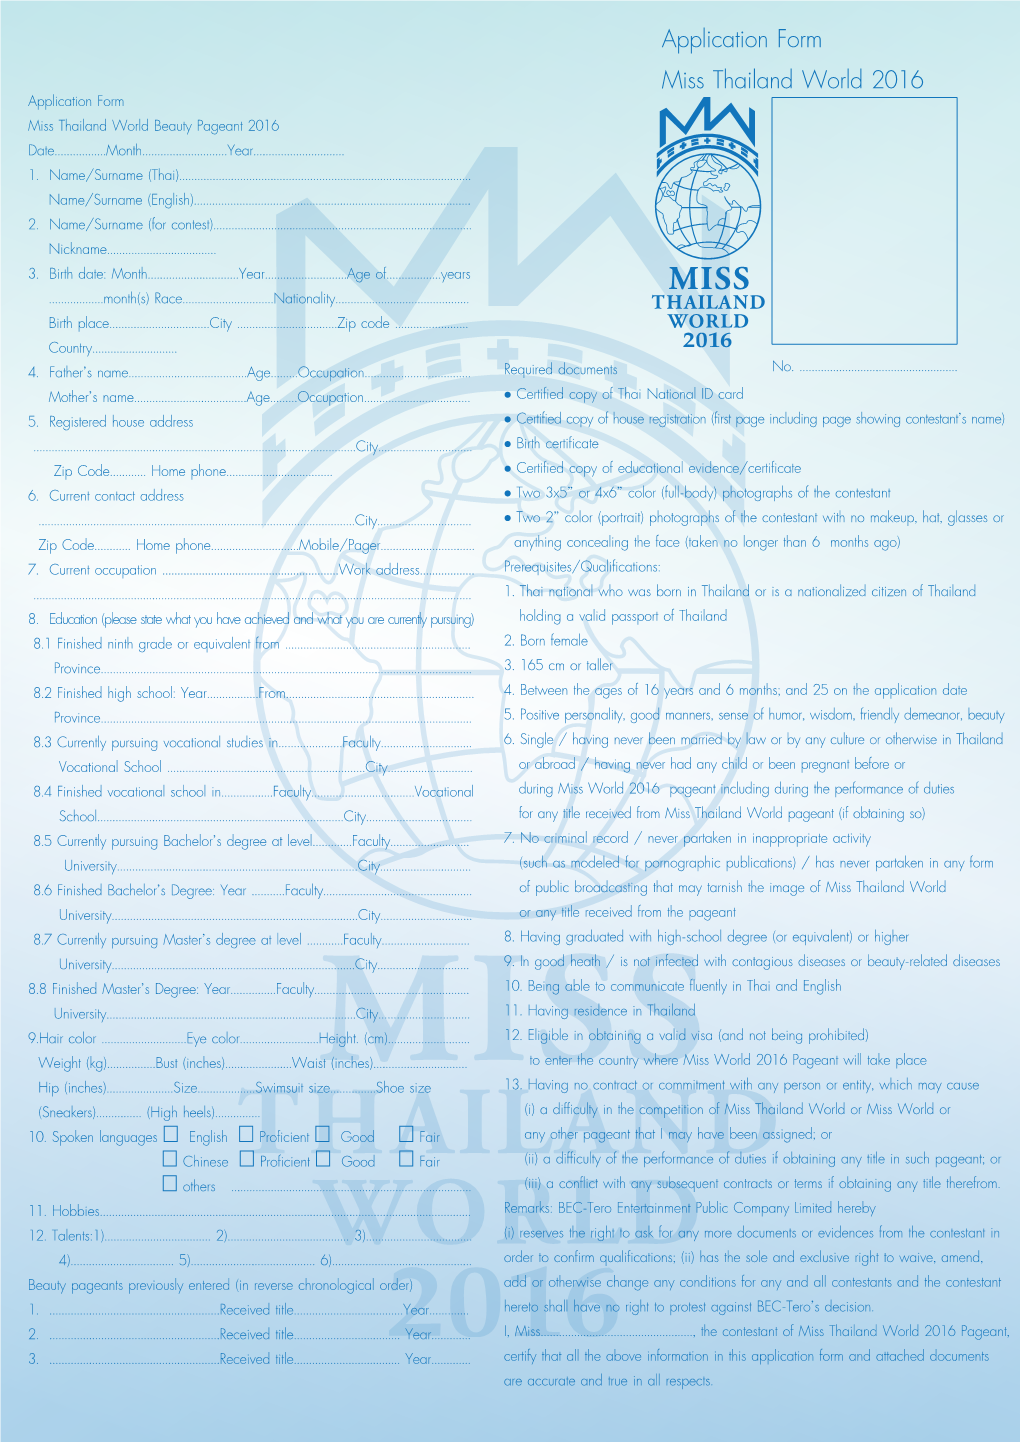 Application Form Miss Thailand World 2016 Application Form Miss Thailand World Beauty Pageant 2016 Date